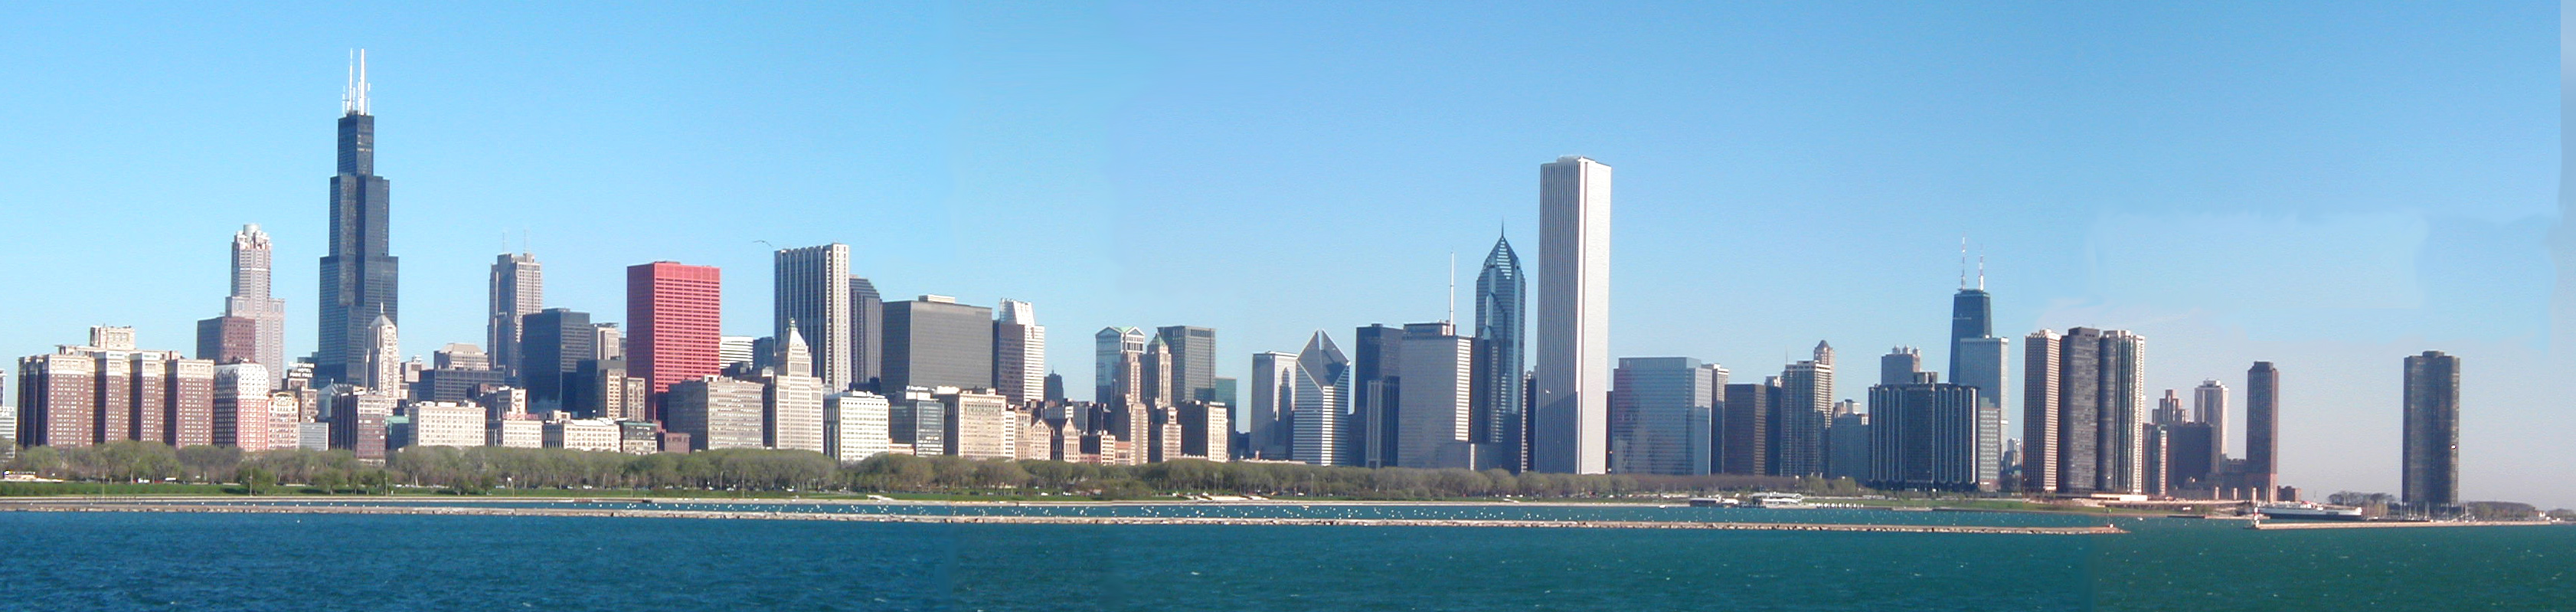 Chicago - USA - SkyscraperCity